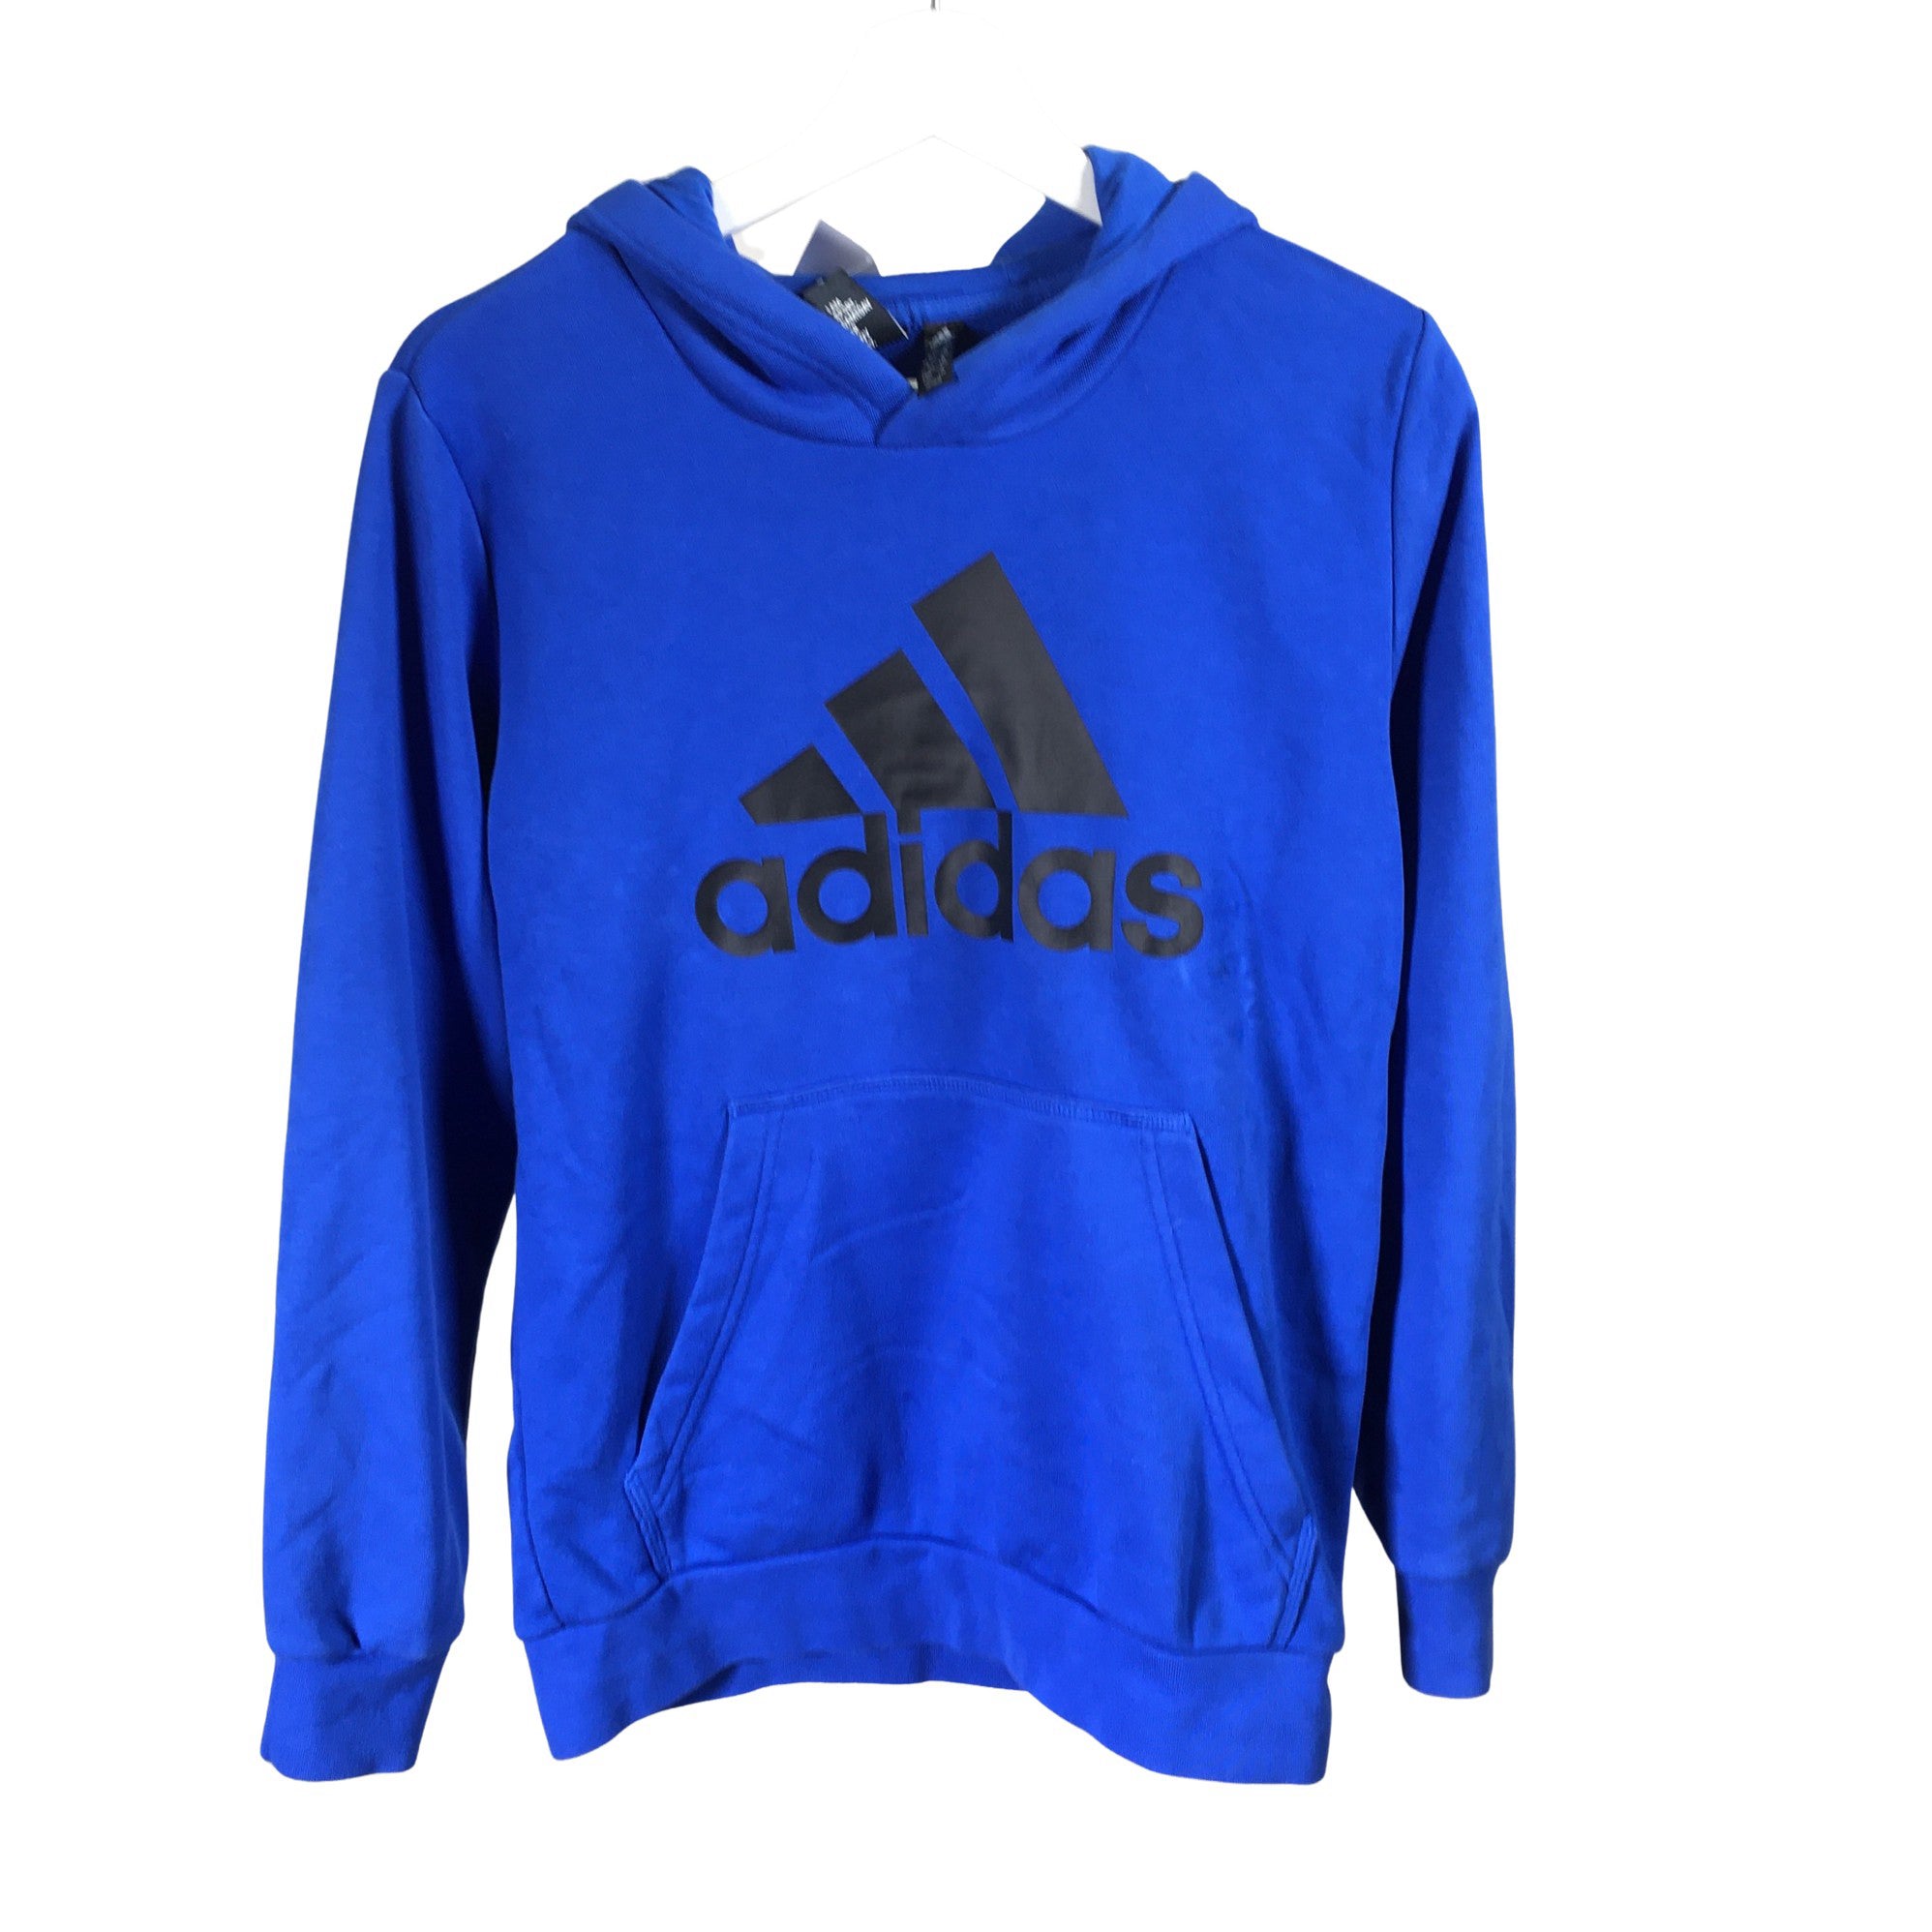 Unisex Adidas Hoodie, size 158 - 164 (Blue)